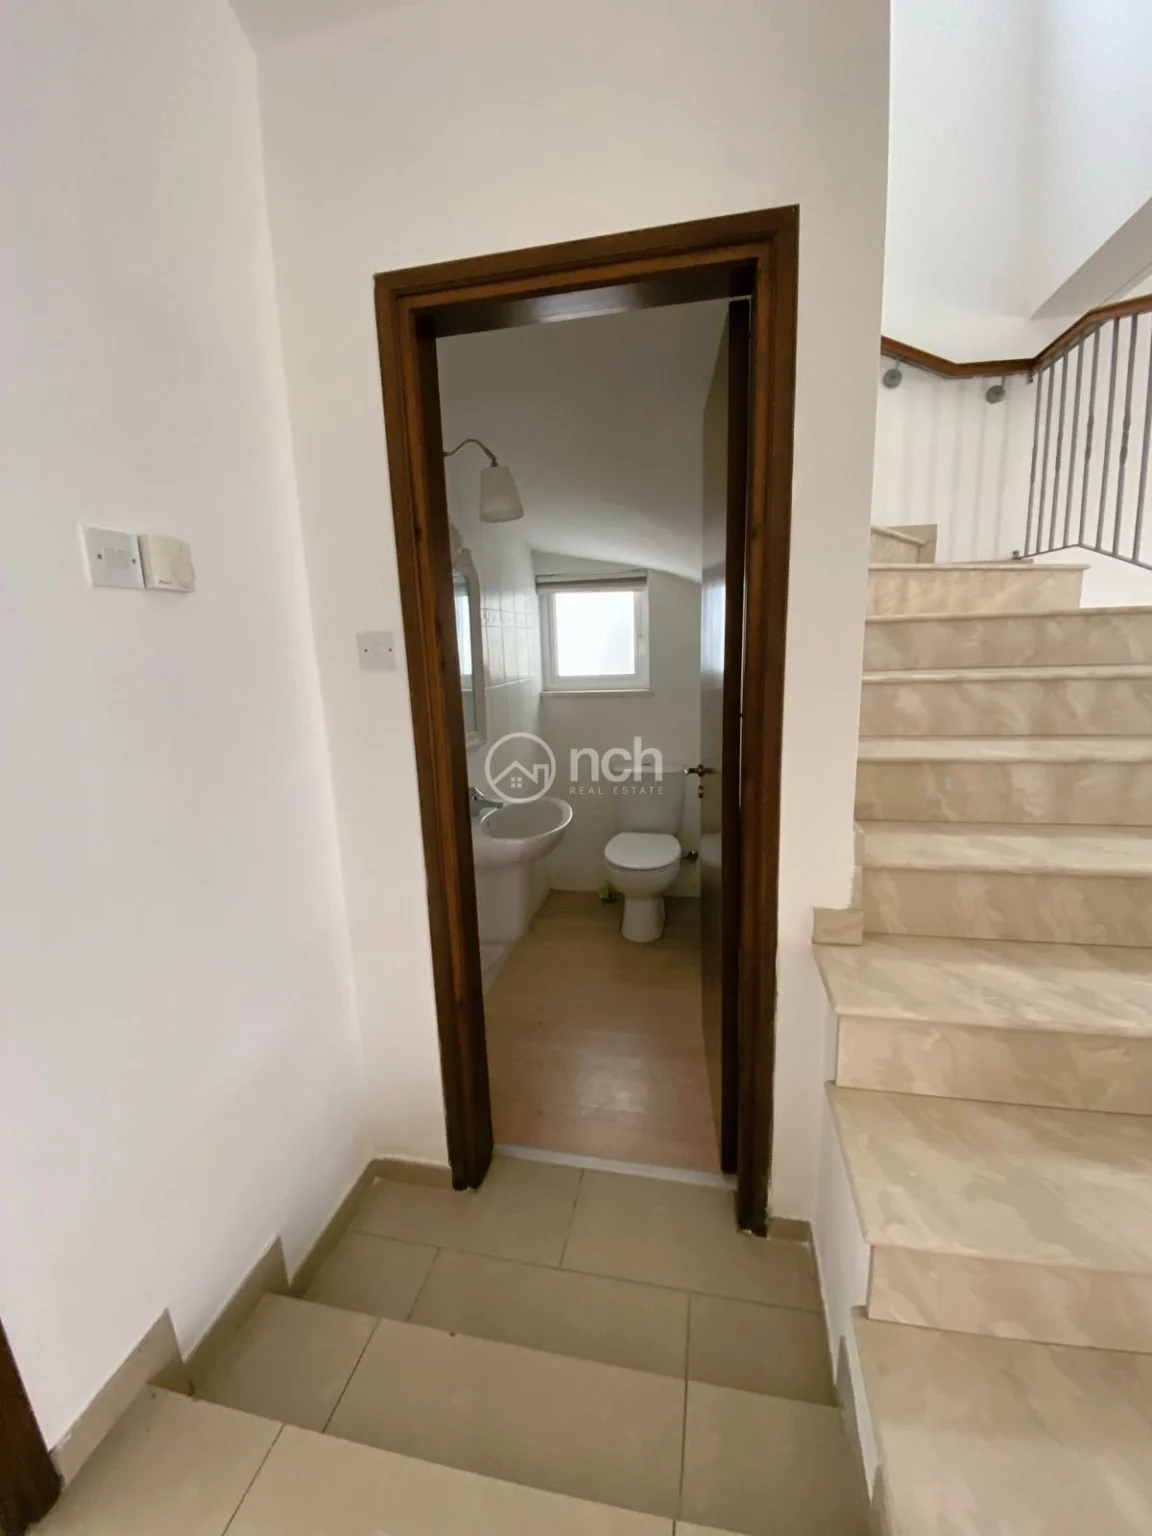 4 Bedroom Villa for Rent in Lakatamia, Nicosia District